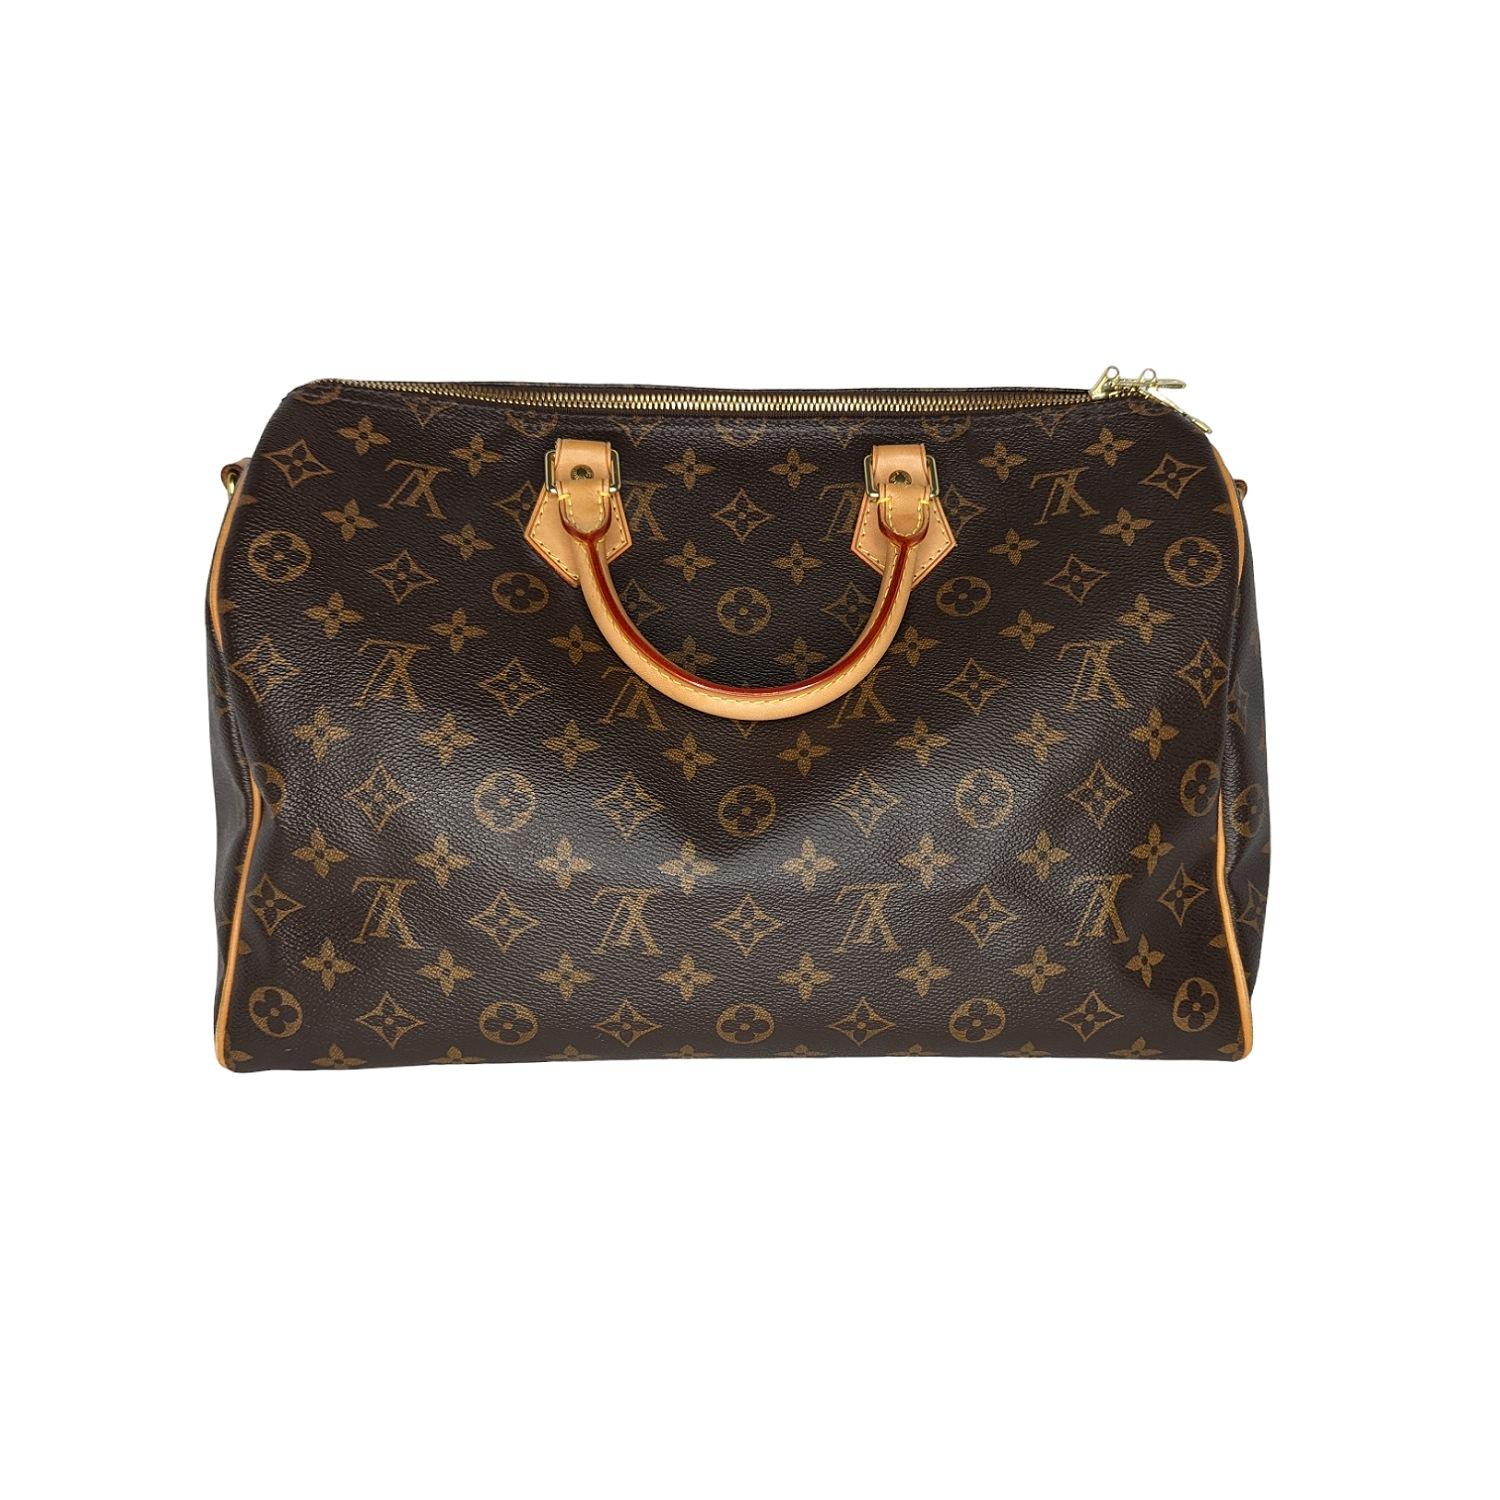 Louis Vuitton Monogram Canvas Speedy Bandouliere 35 Bag In Excellent Condition For Sale In Scottsdale, AZ